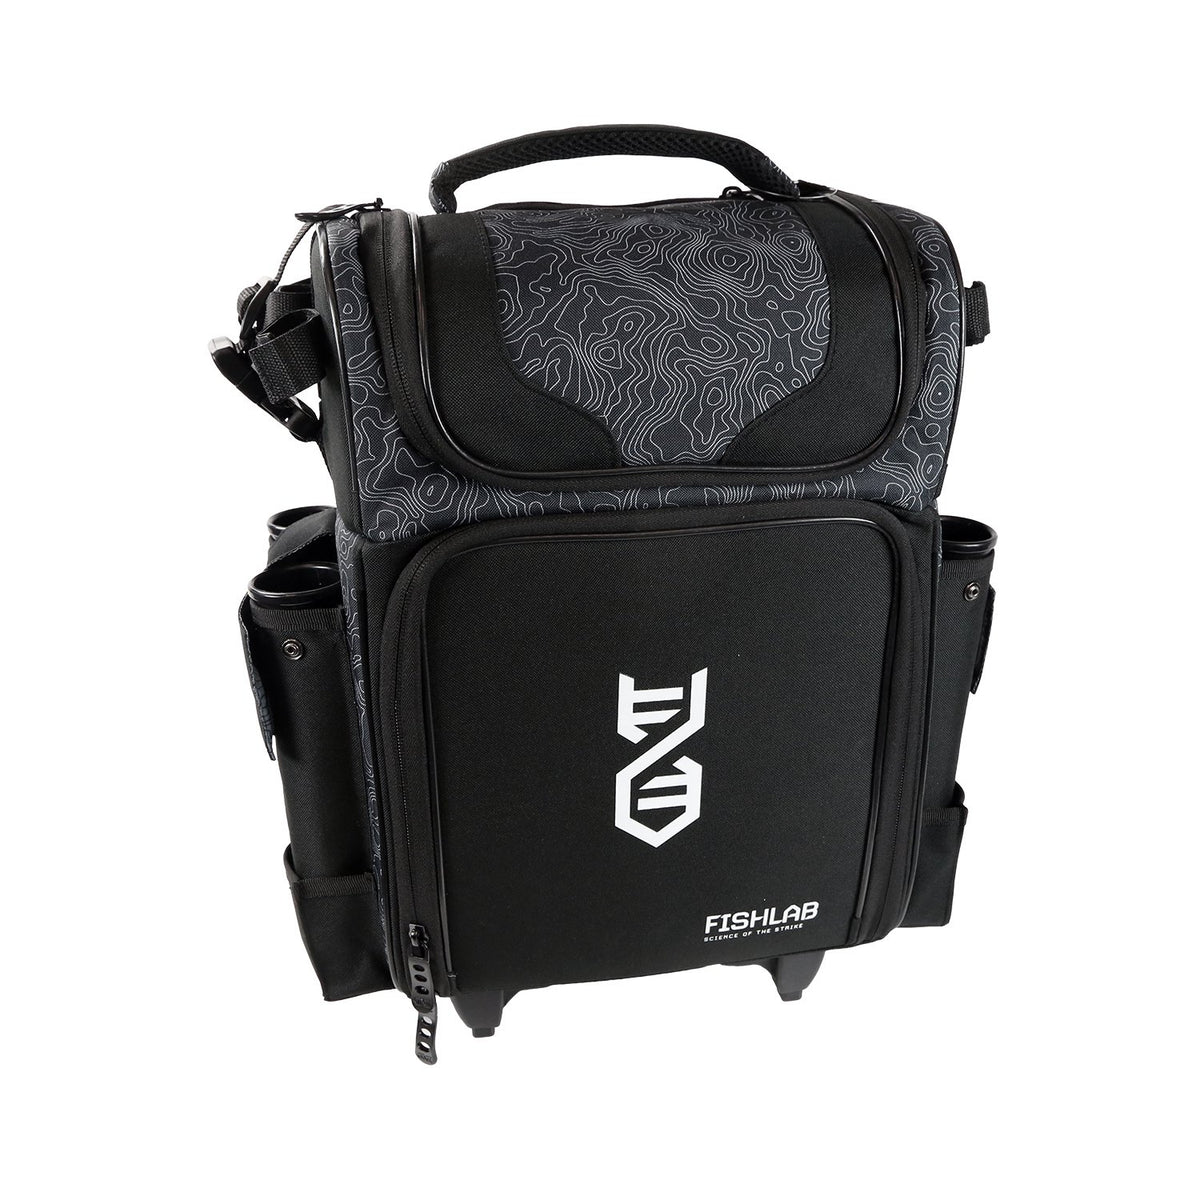 Ghosthorn Fishing Tackle Backpack Storage Bag - Outdoor Shoulder Backpack - Fishing Gear Bag Standard Incognito Camouflage